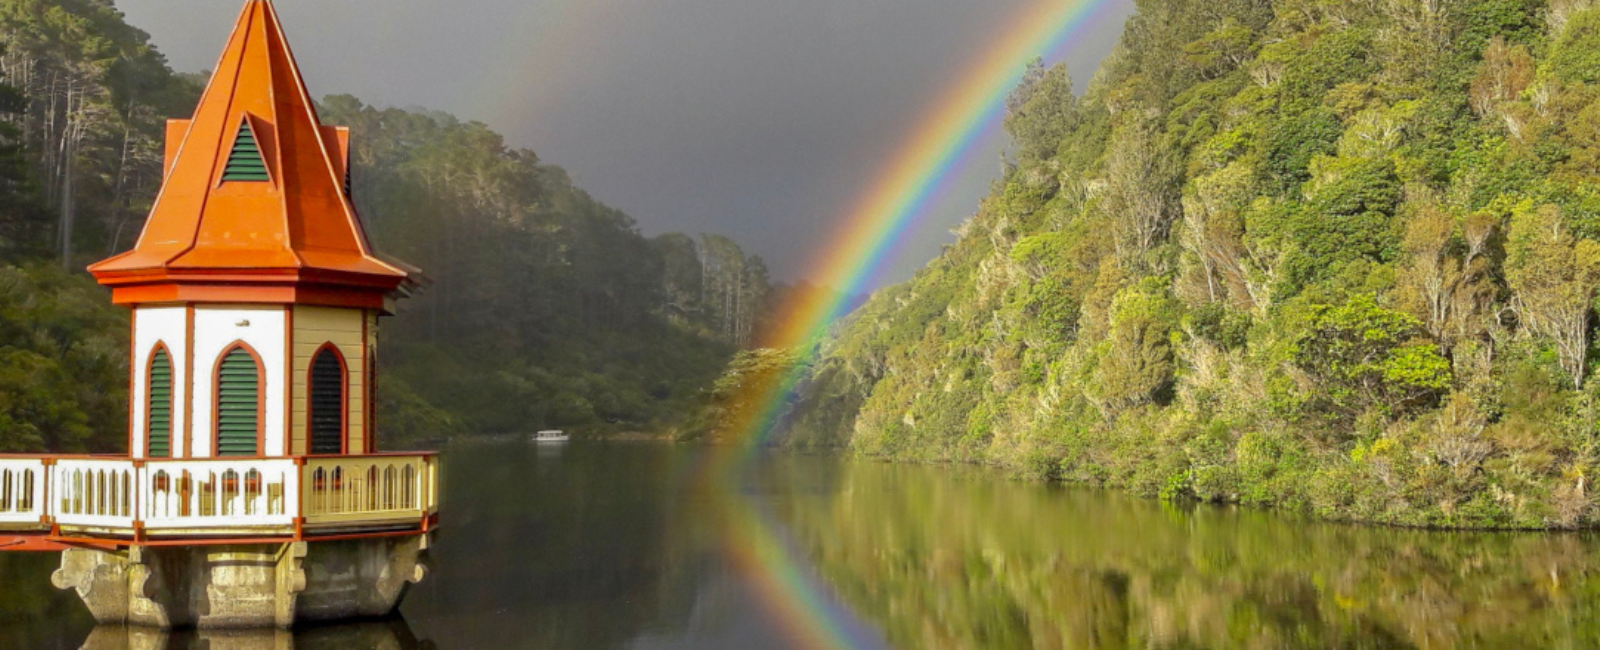 ZEALANDIA lake and rainbow